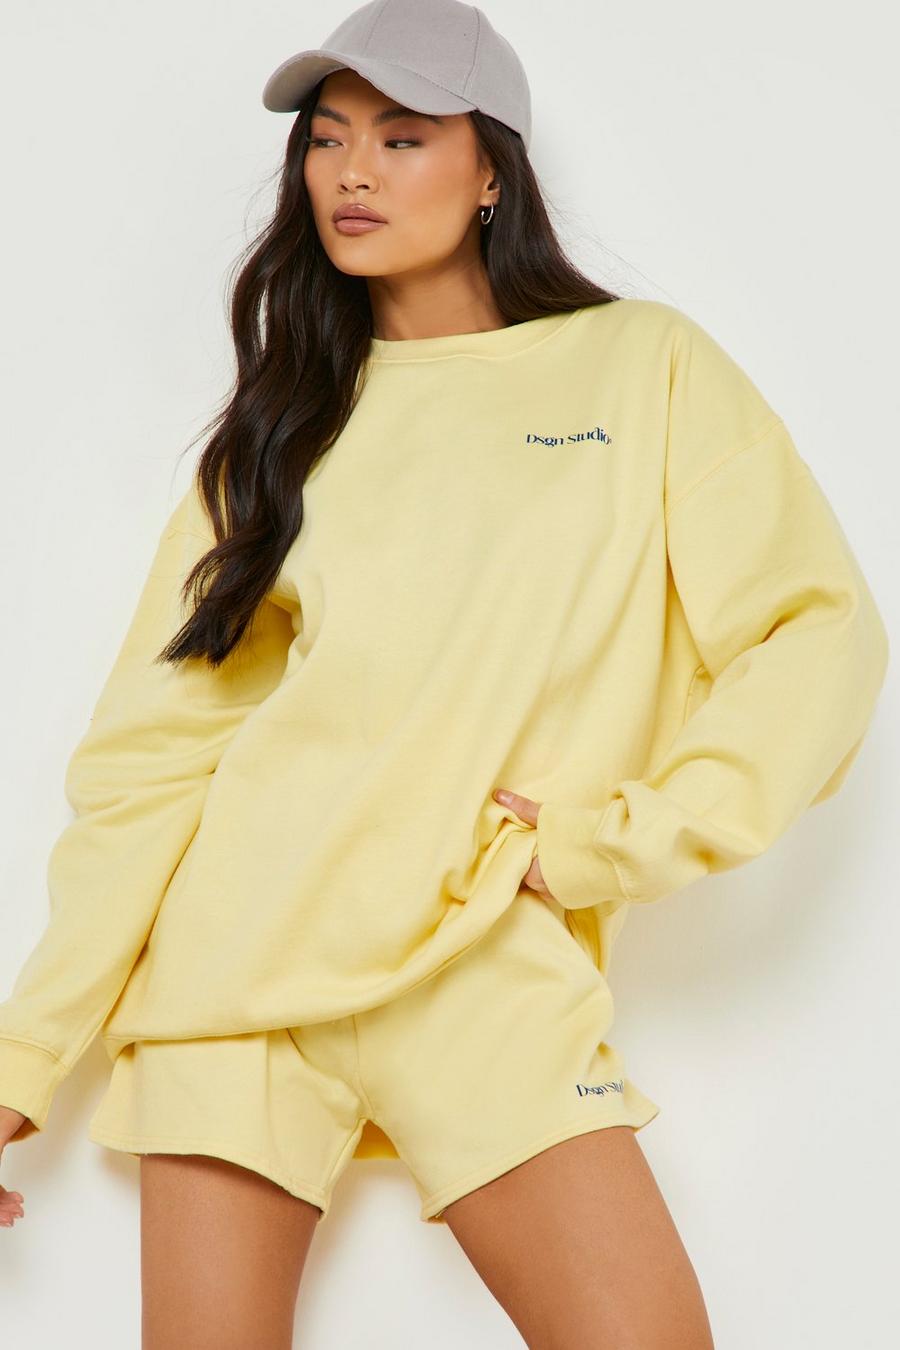 Lemon yellow Dsgn Studio Printed Sweater Short Tracksuit 